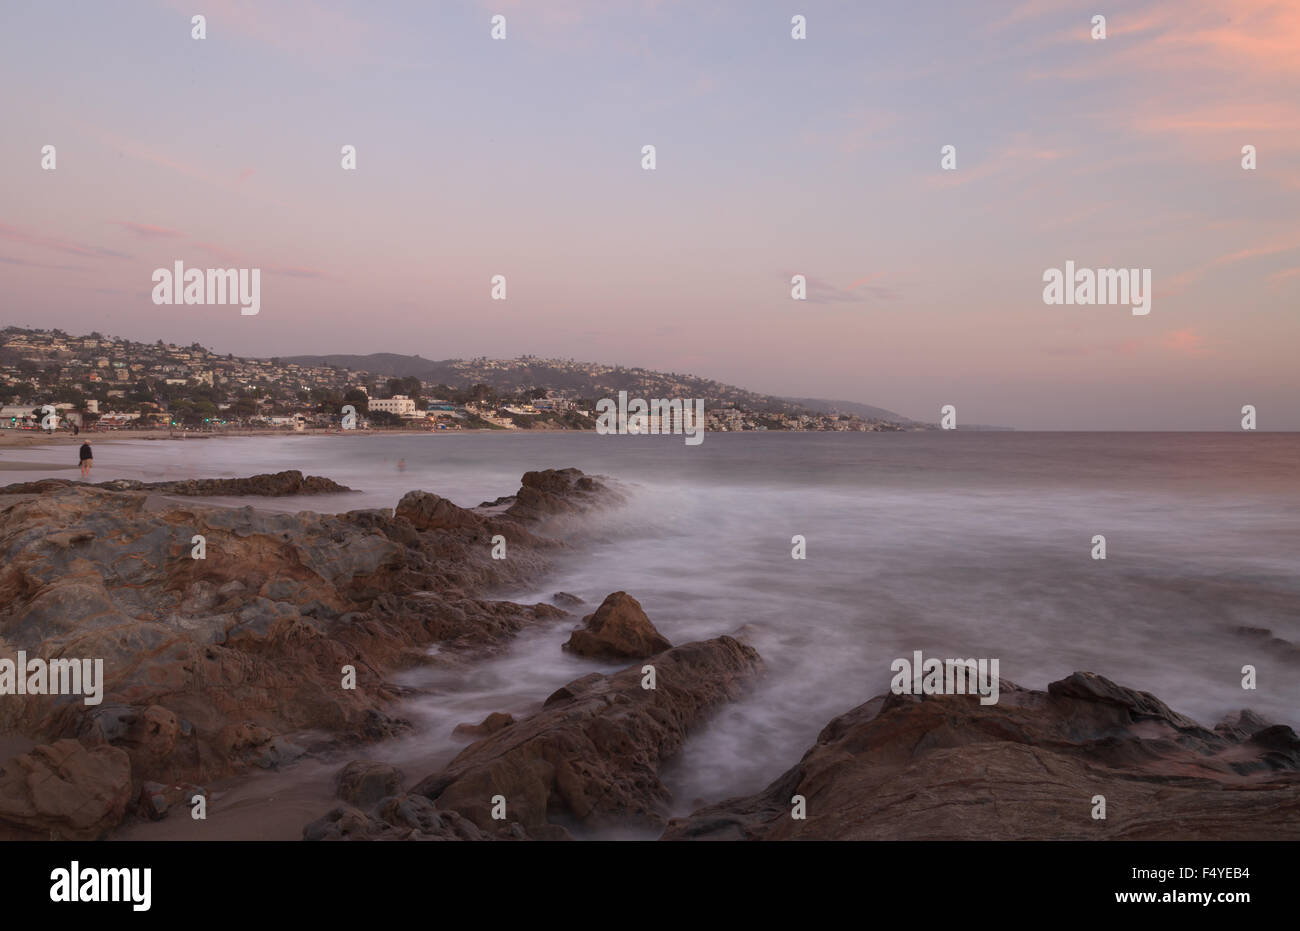 Long exposure of rocks in waves, giving a mist like effect over ocean in Laguna Beach, California Stock Photo